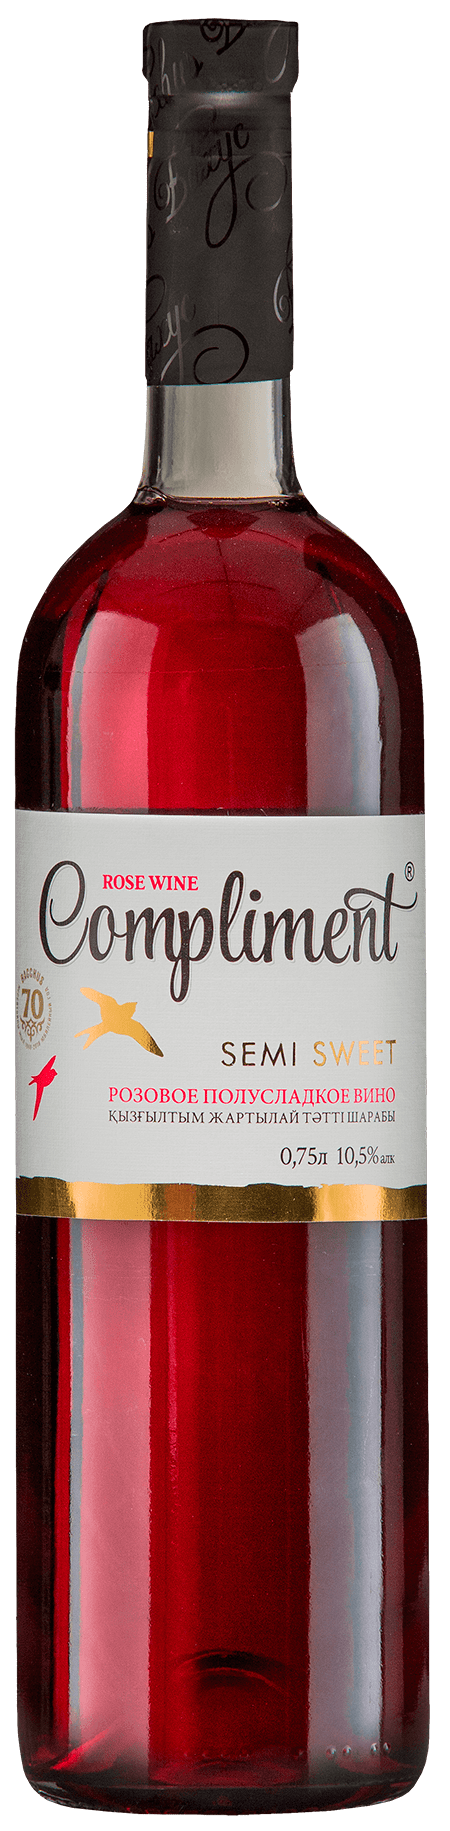 Semi-sweet rosé wine Compliment